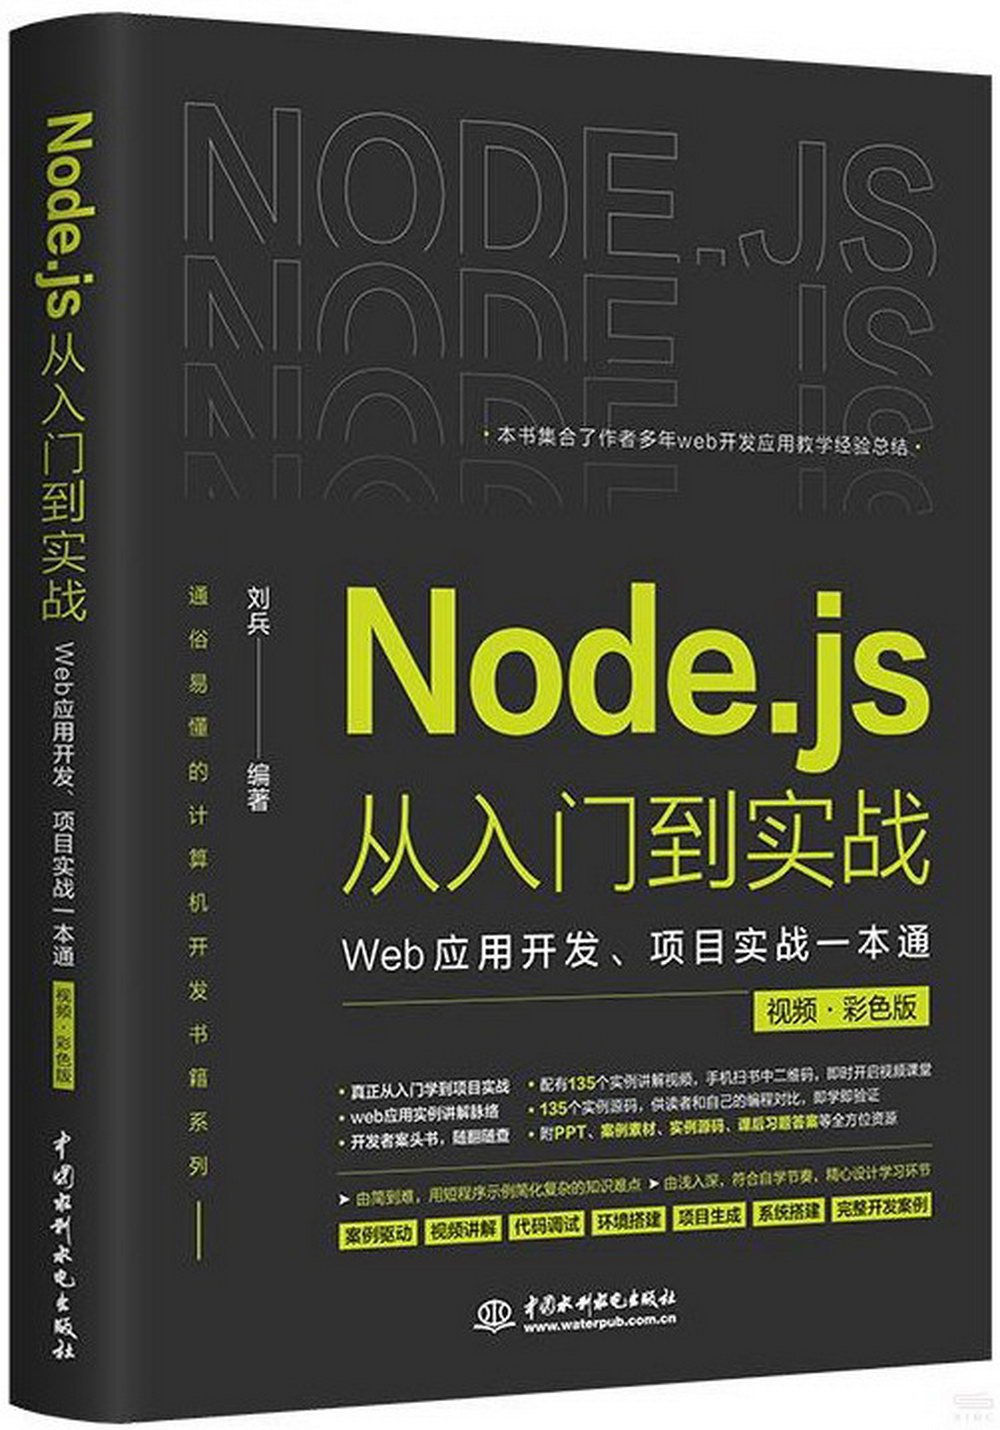 Node.js從入門到實戰：Web應用開發、項目實戰一本通（視頻·彩色版）